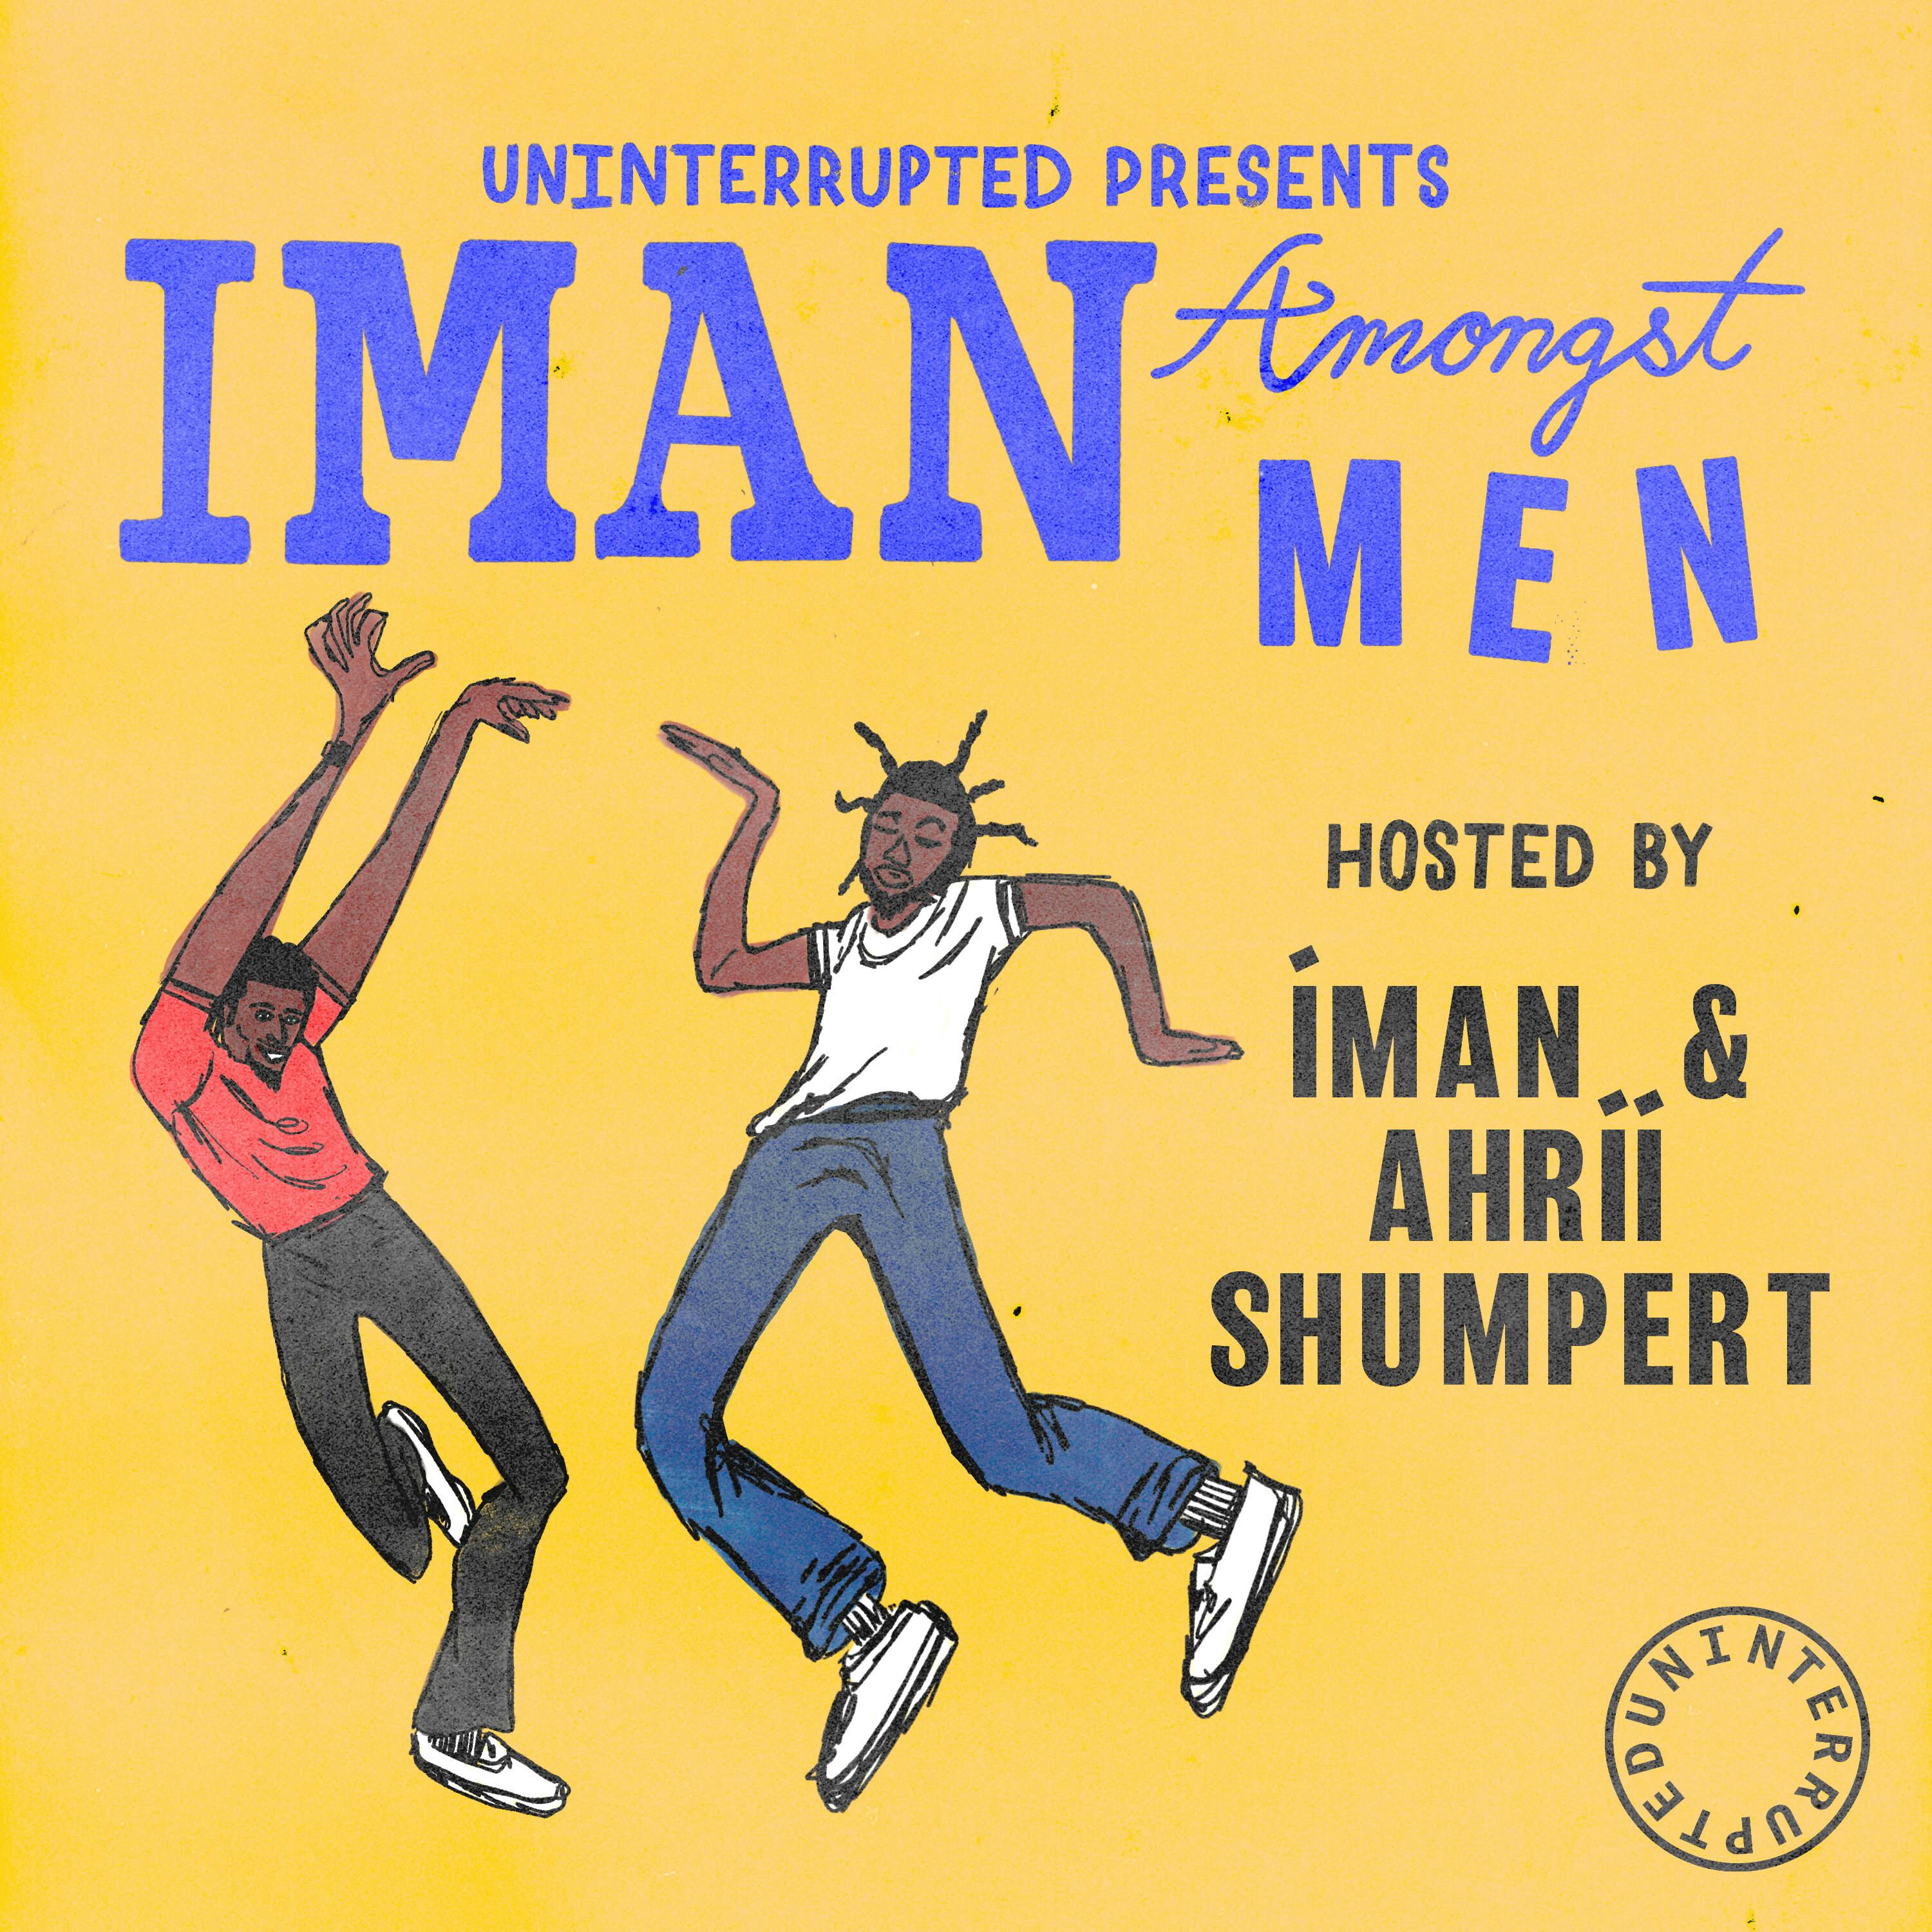 Iman Amongst Men podcast show image